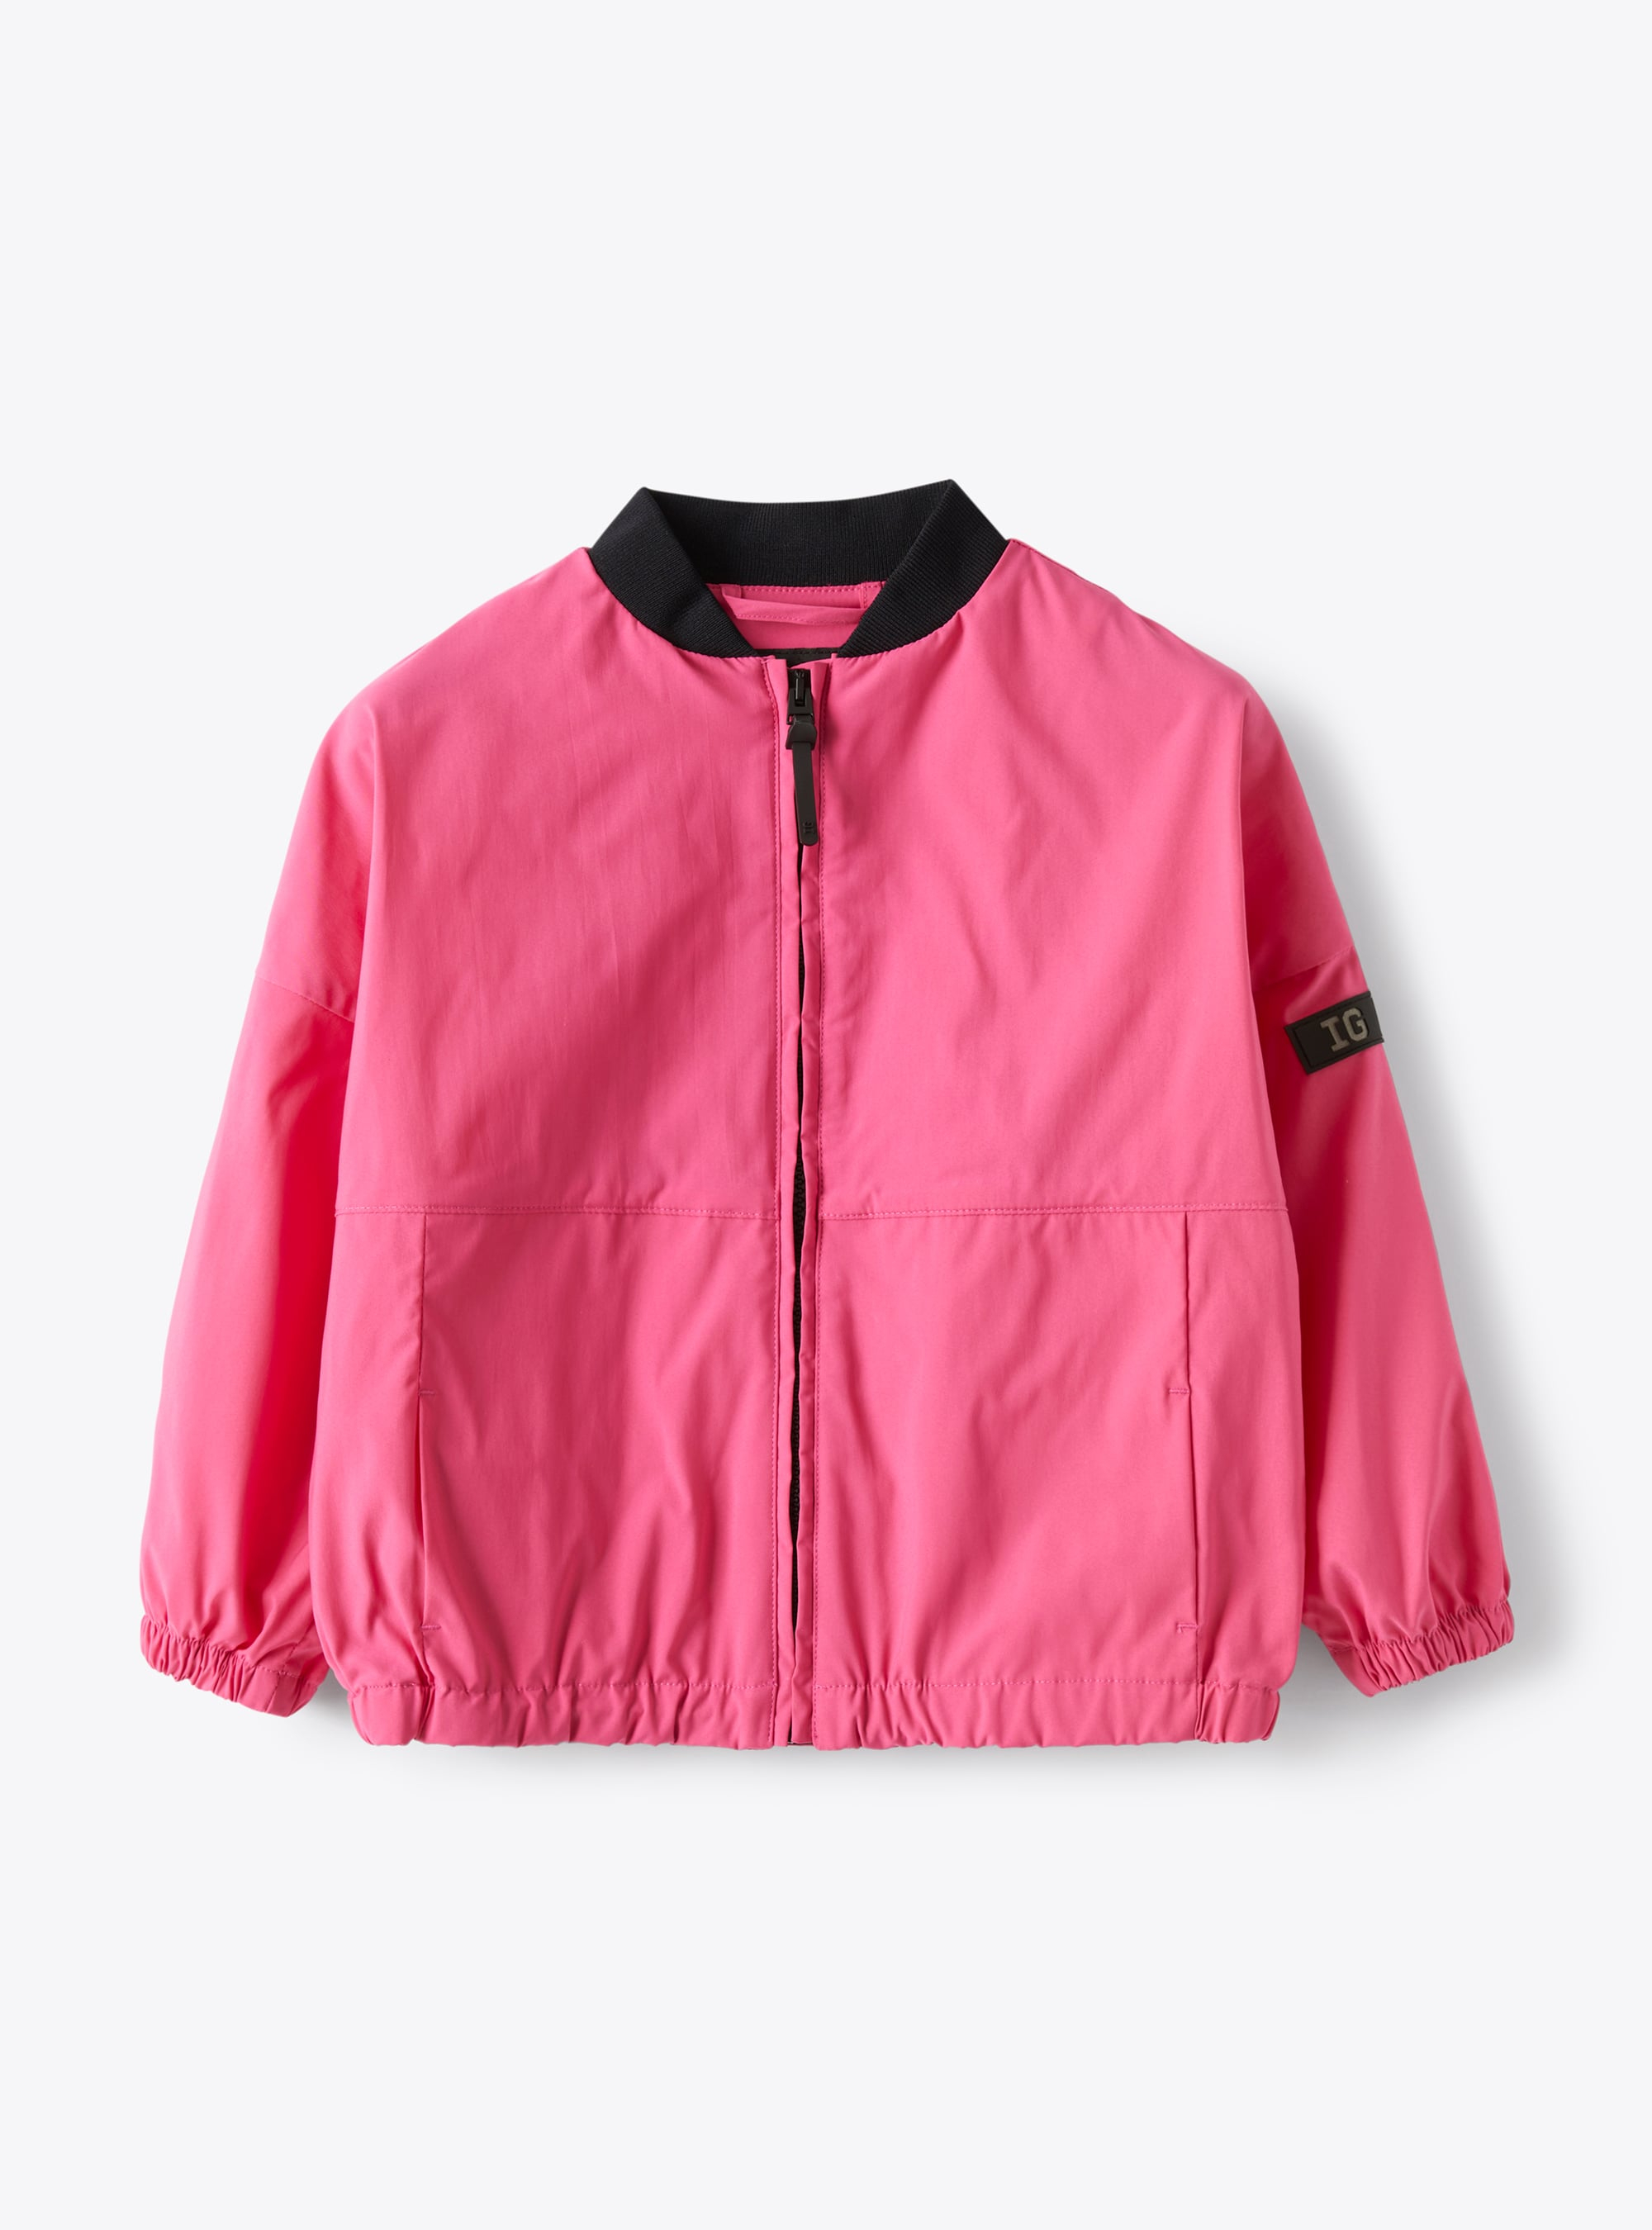 Jacket in fuchsia-pink hi-tech nylon - Jackets - Il Gufo